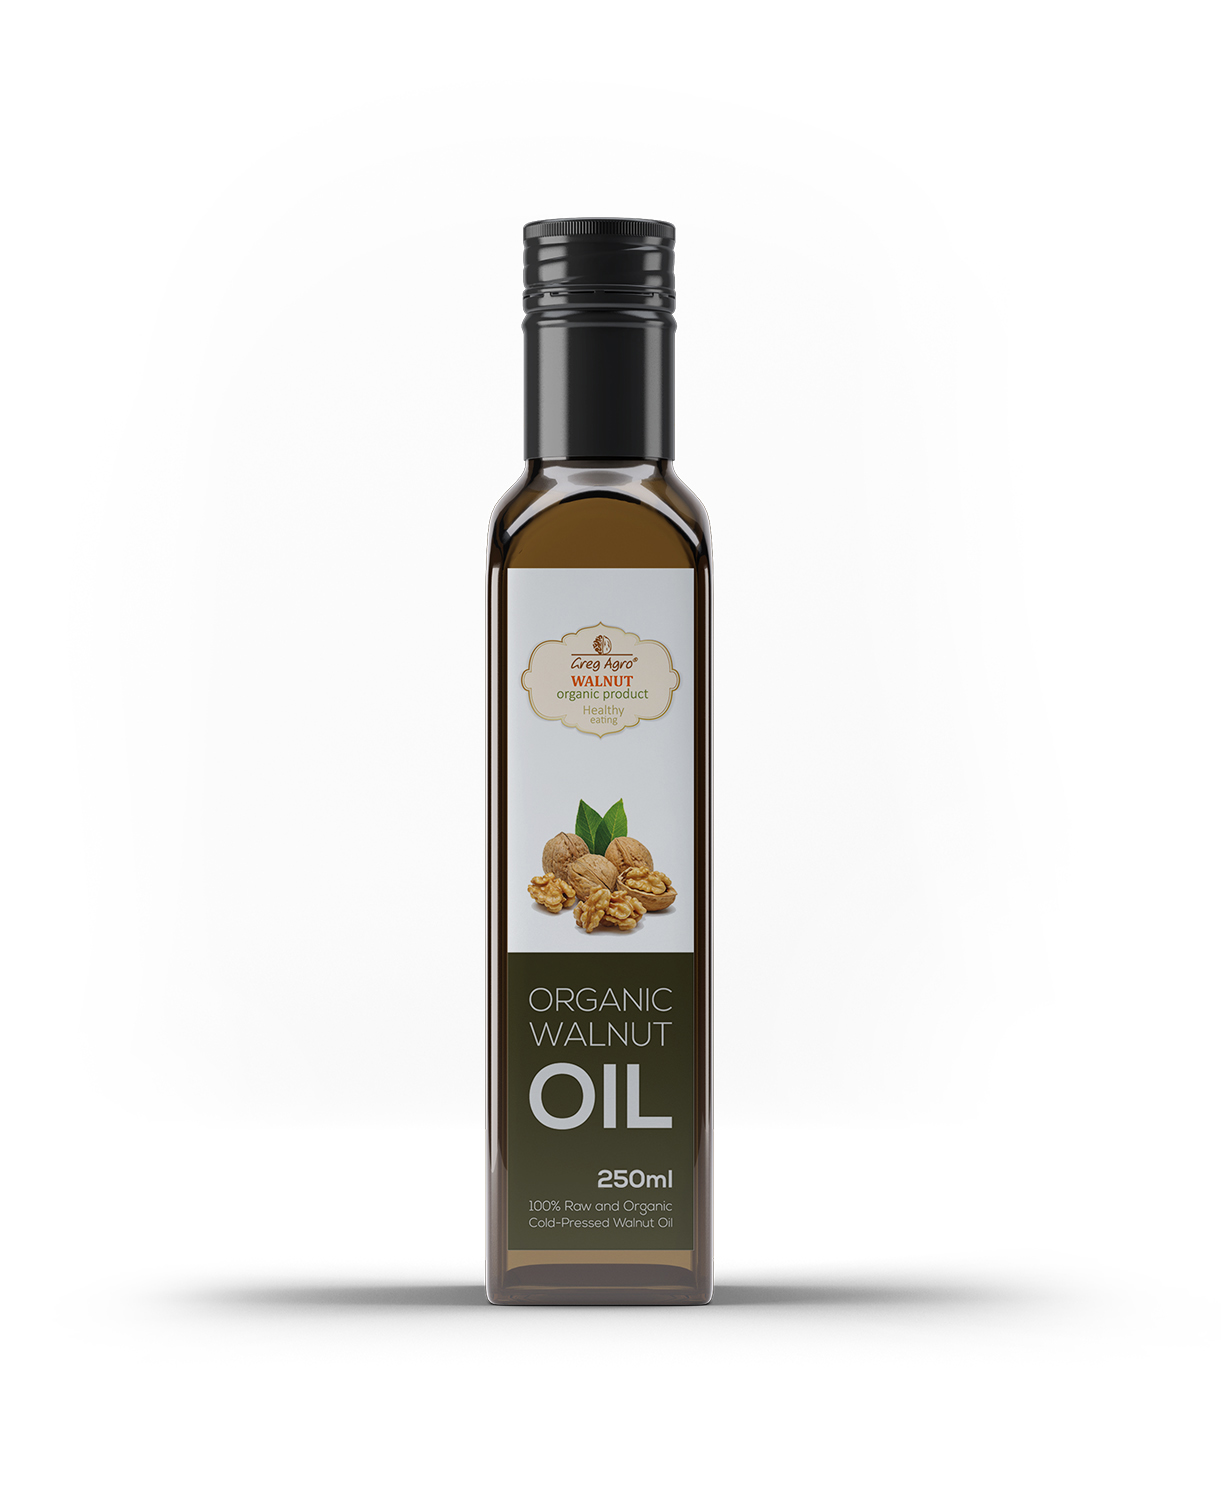 Buy Walnut Oil 250ml Newcastle upon Tyne, Alnwick, Gateshead, United Kingdom, England, Scotland, gregagro.co.uk